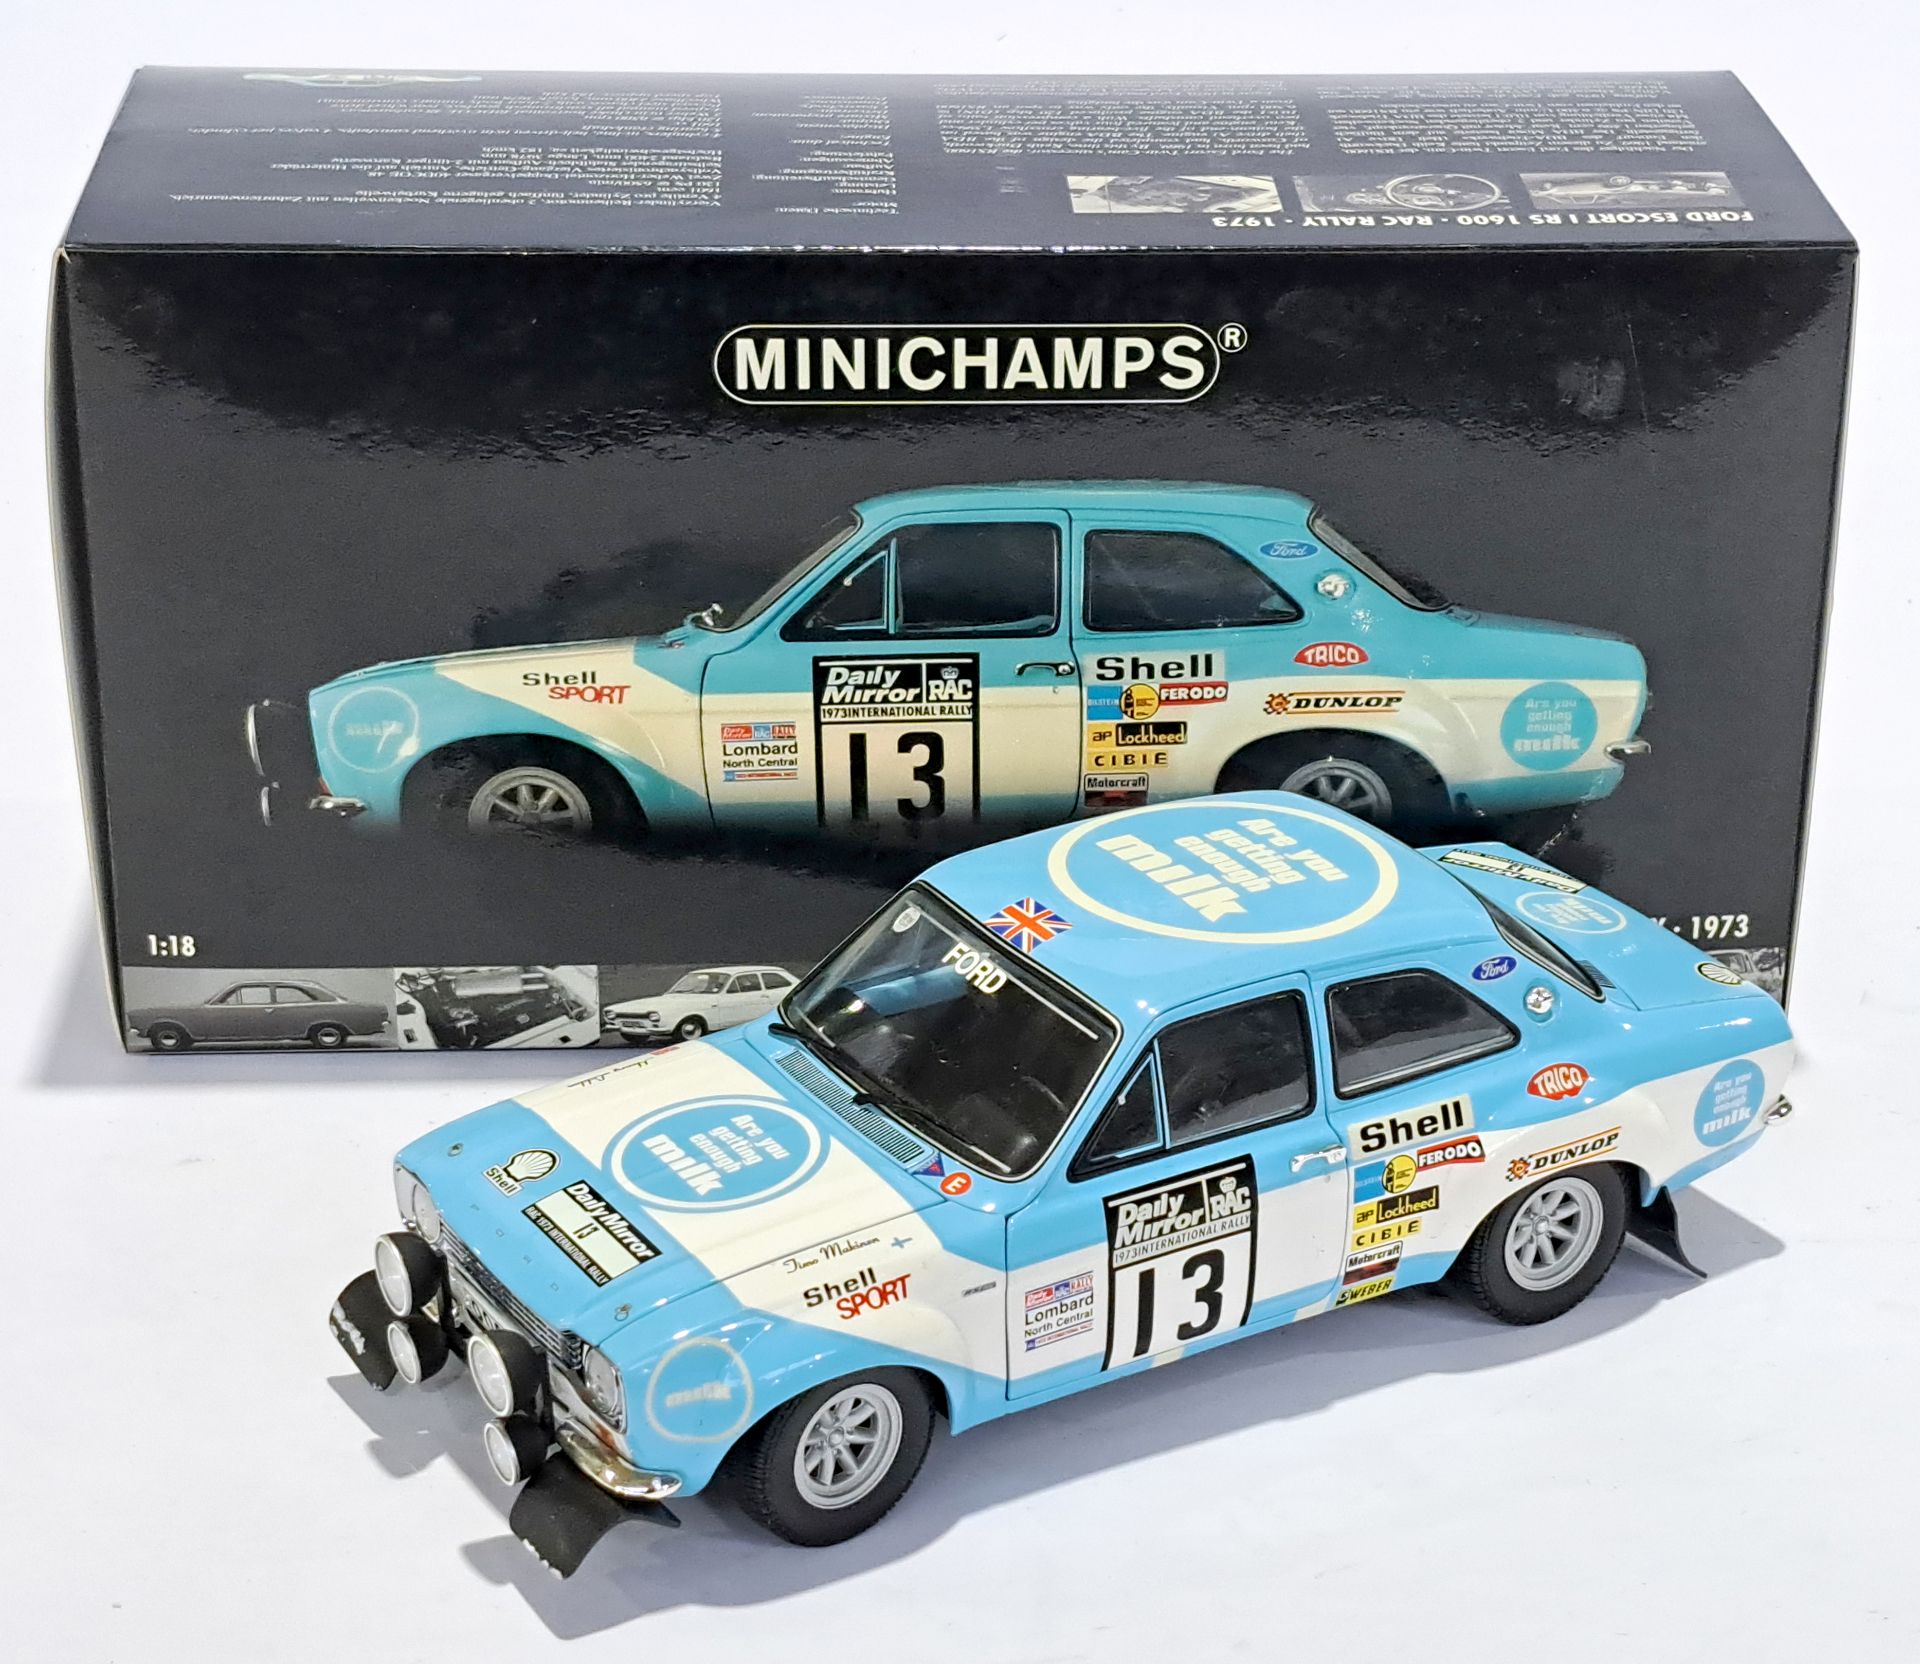 Minichamps (Paul's Model Art) 1:18 scale 738113 Ford Escort I RS 1600 RAC Rally 1973